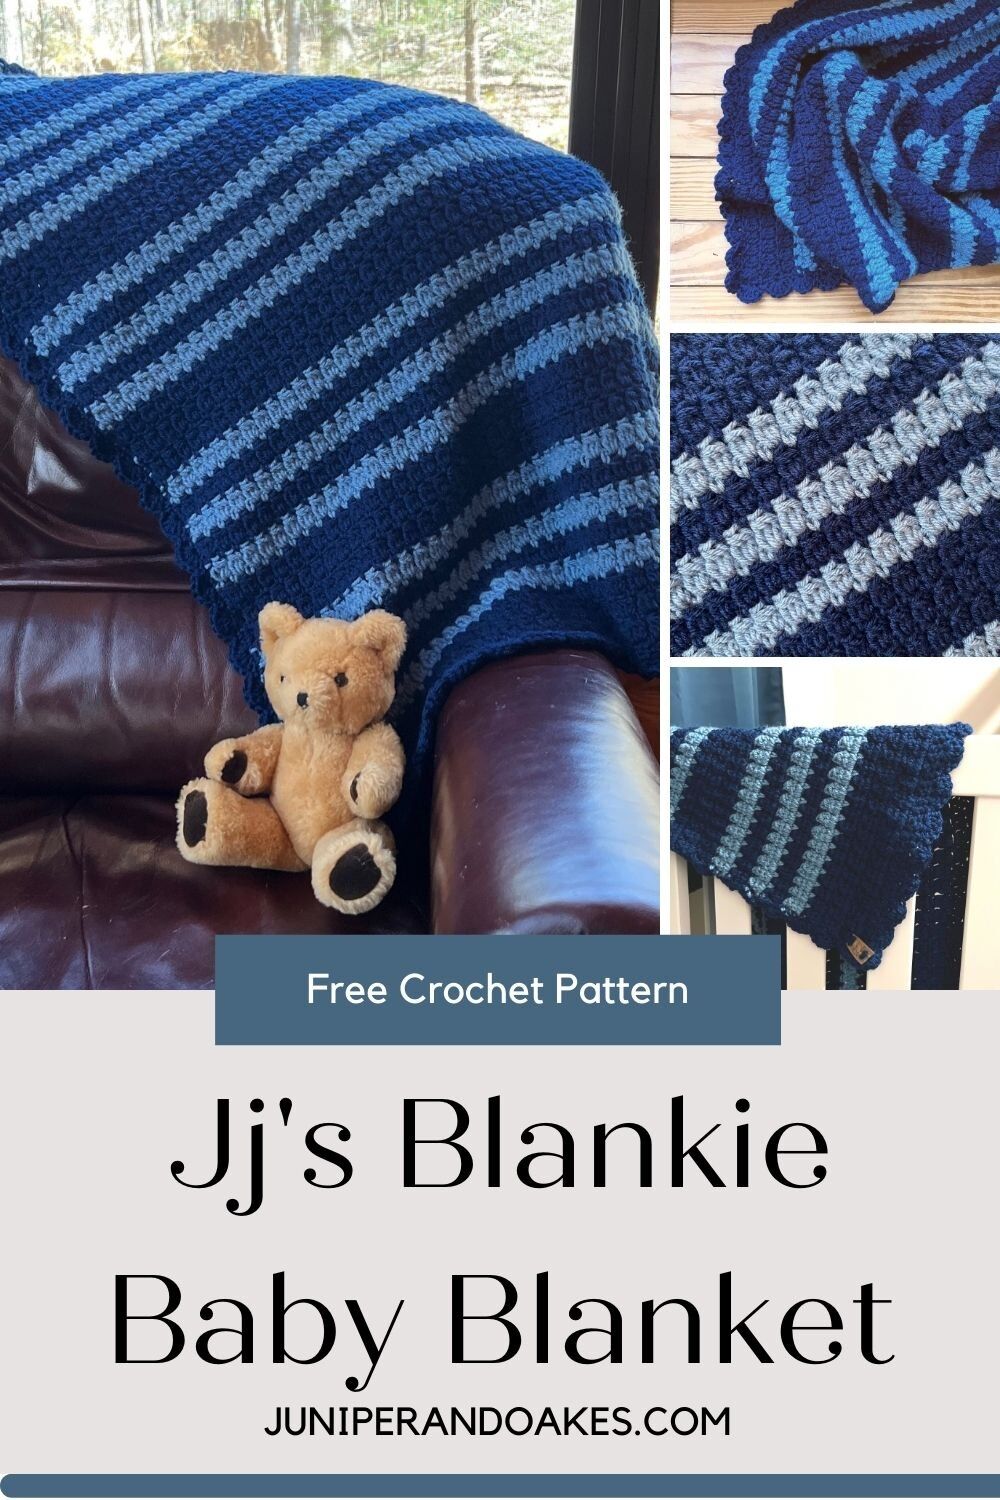 Crochet Patterns Galore - JJ's Blankie Baby Blanket